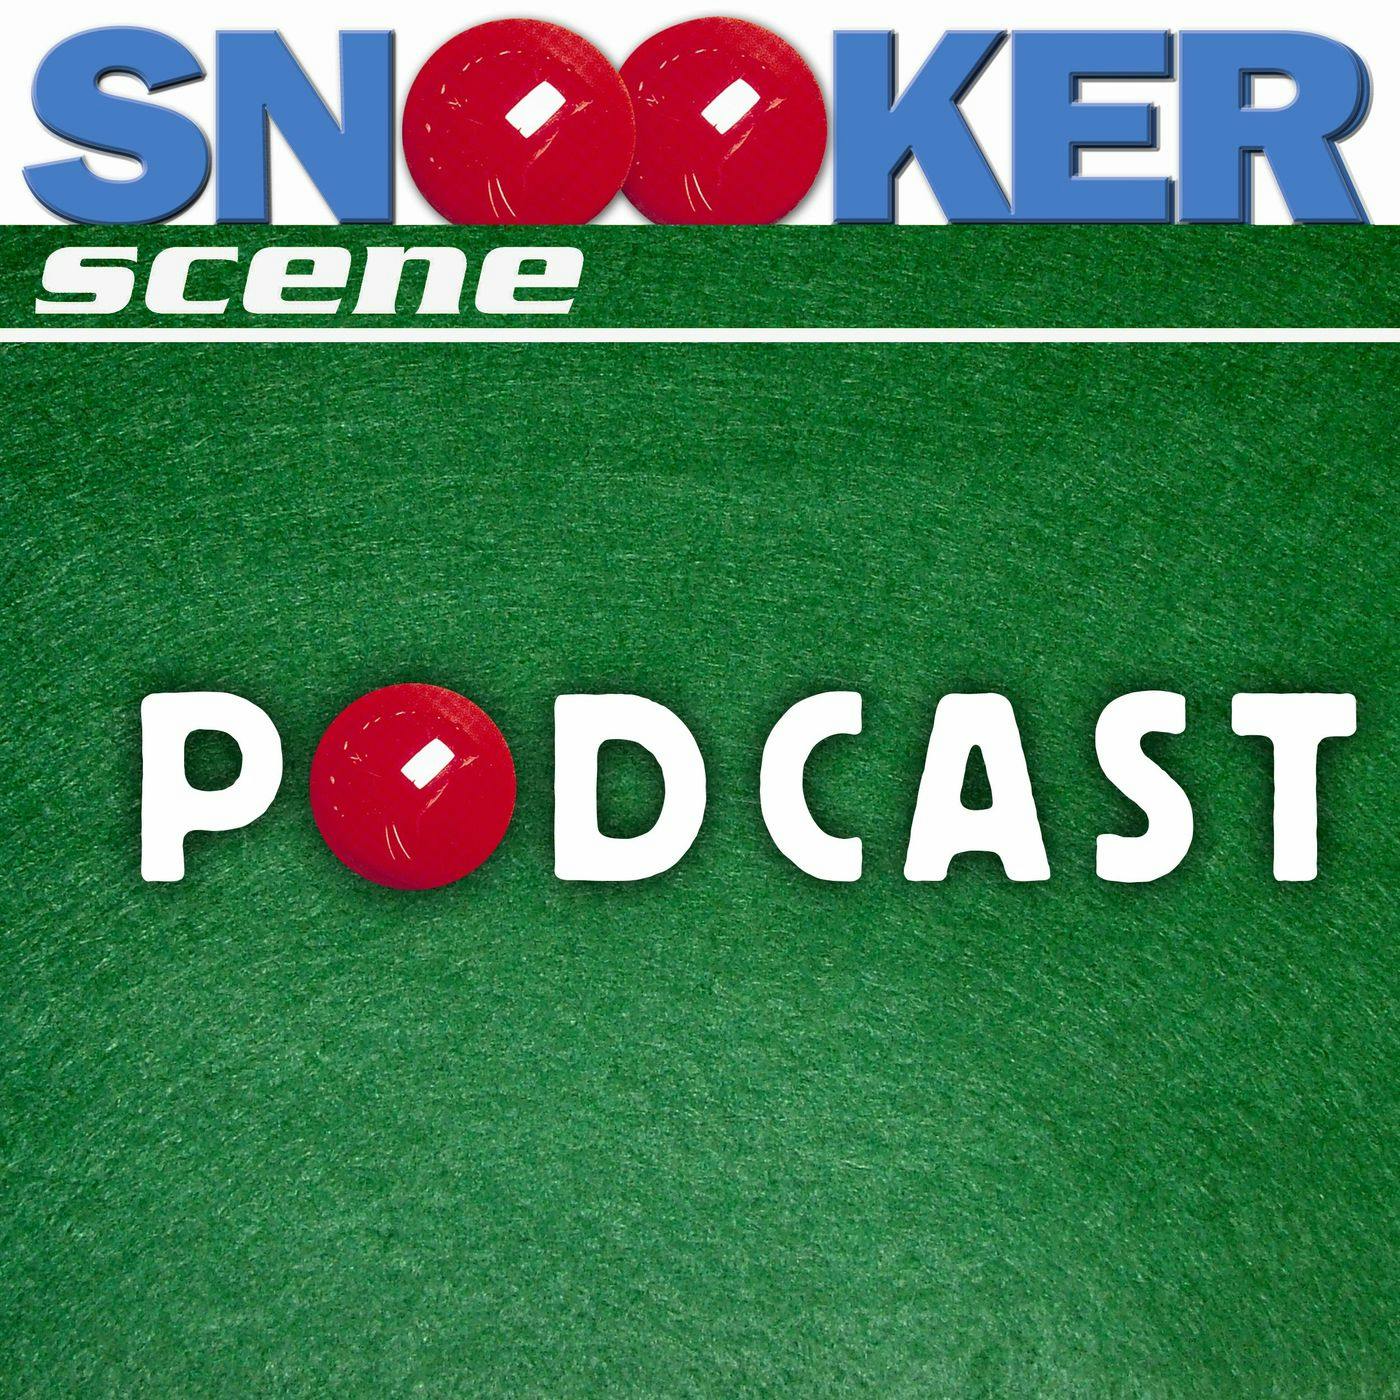 Snooker Scene Podcast episode 148 - Is It Safe?